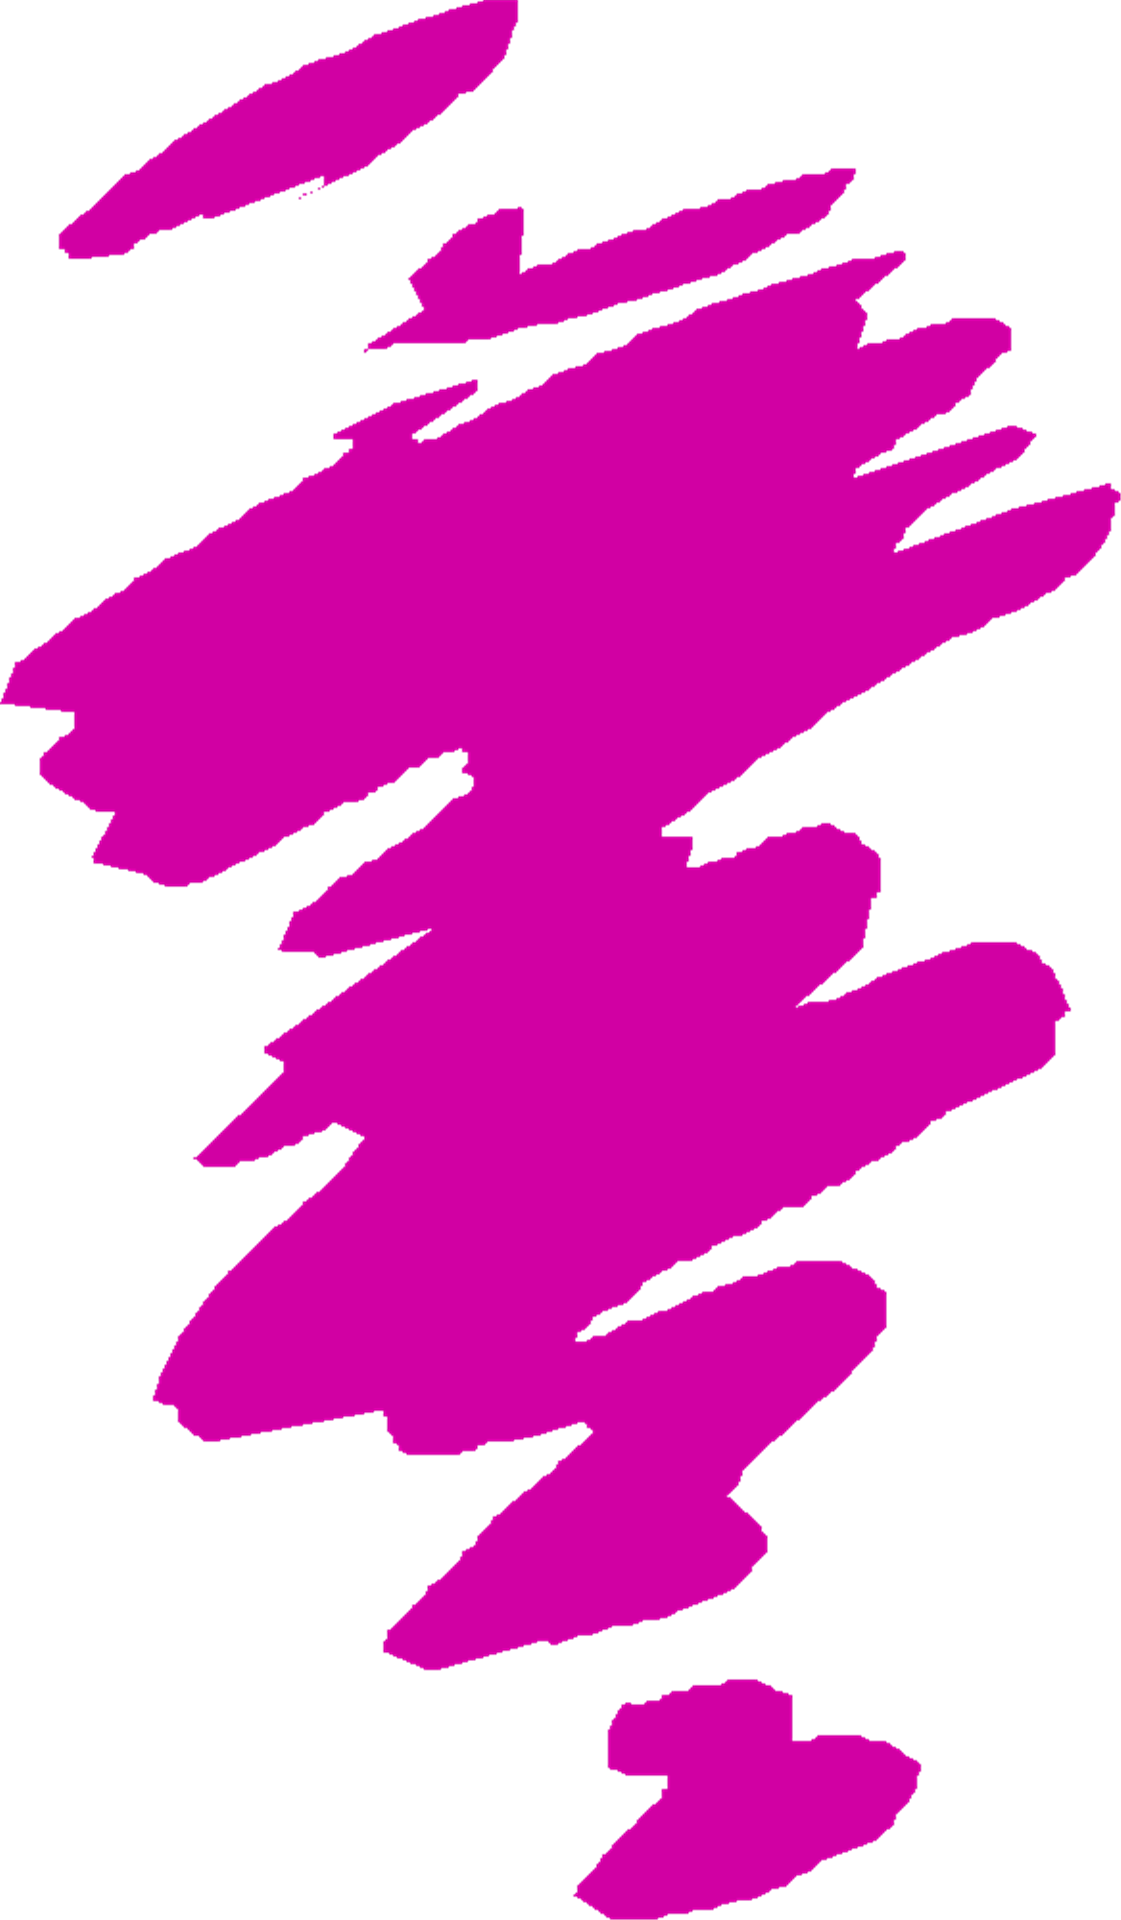 Pink Splash Lines Paint Decor free image download